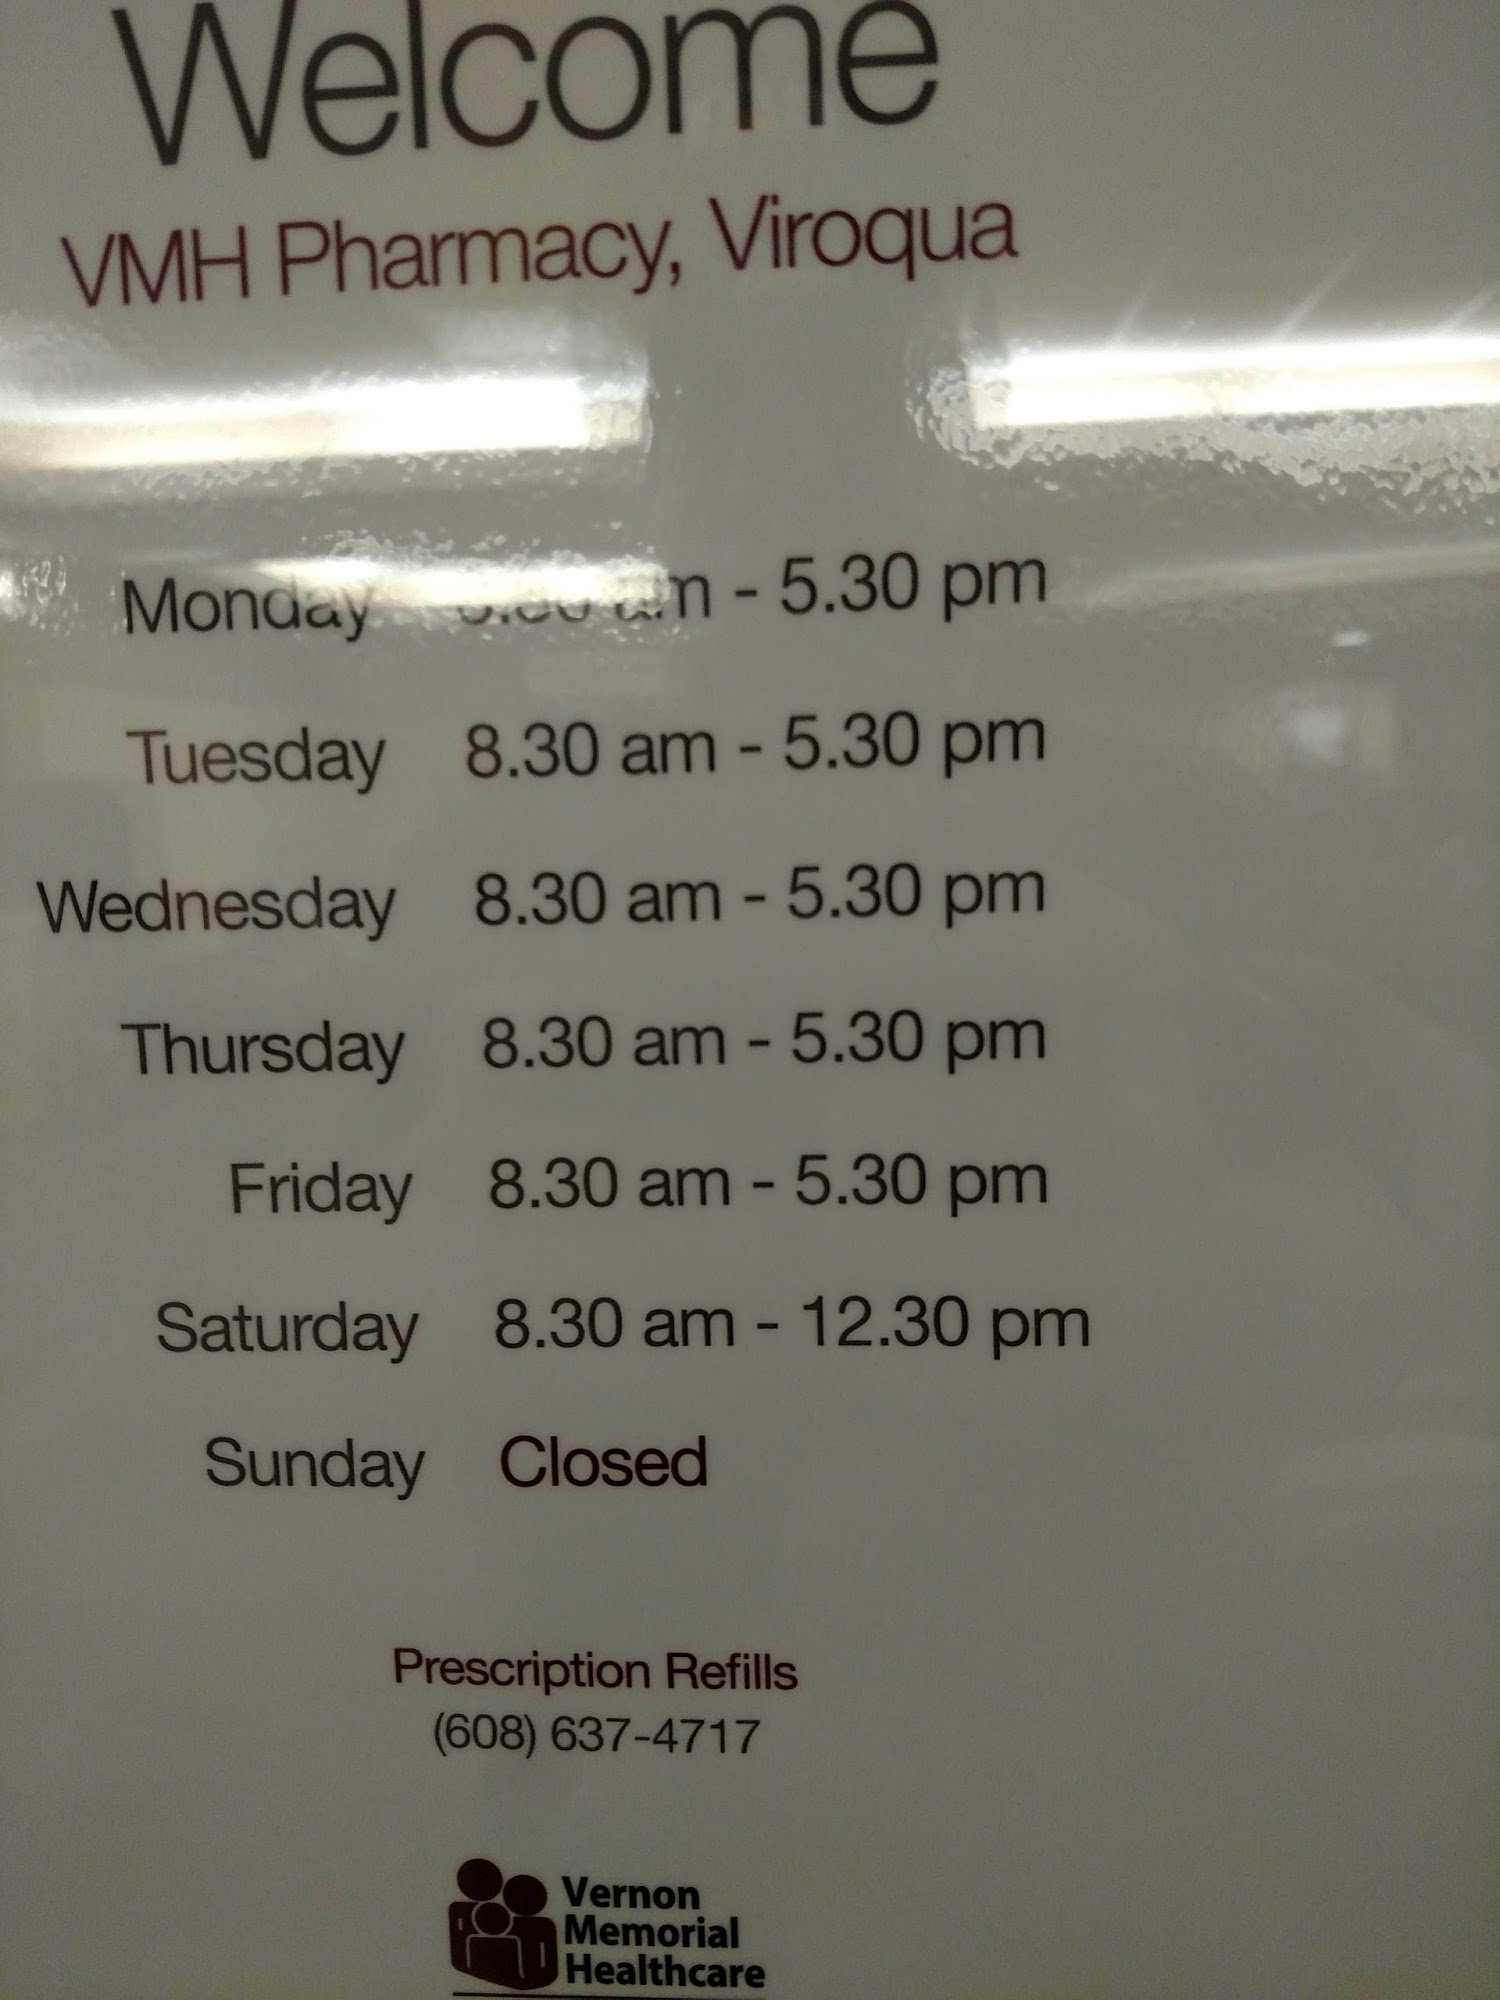 VMH Pharmacy